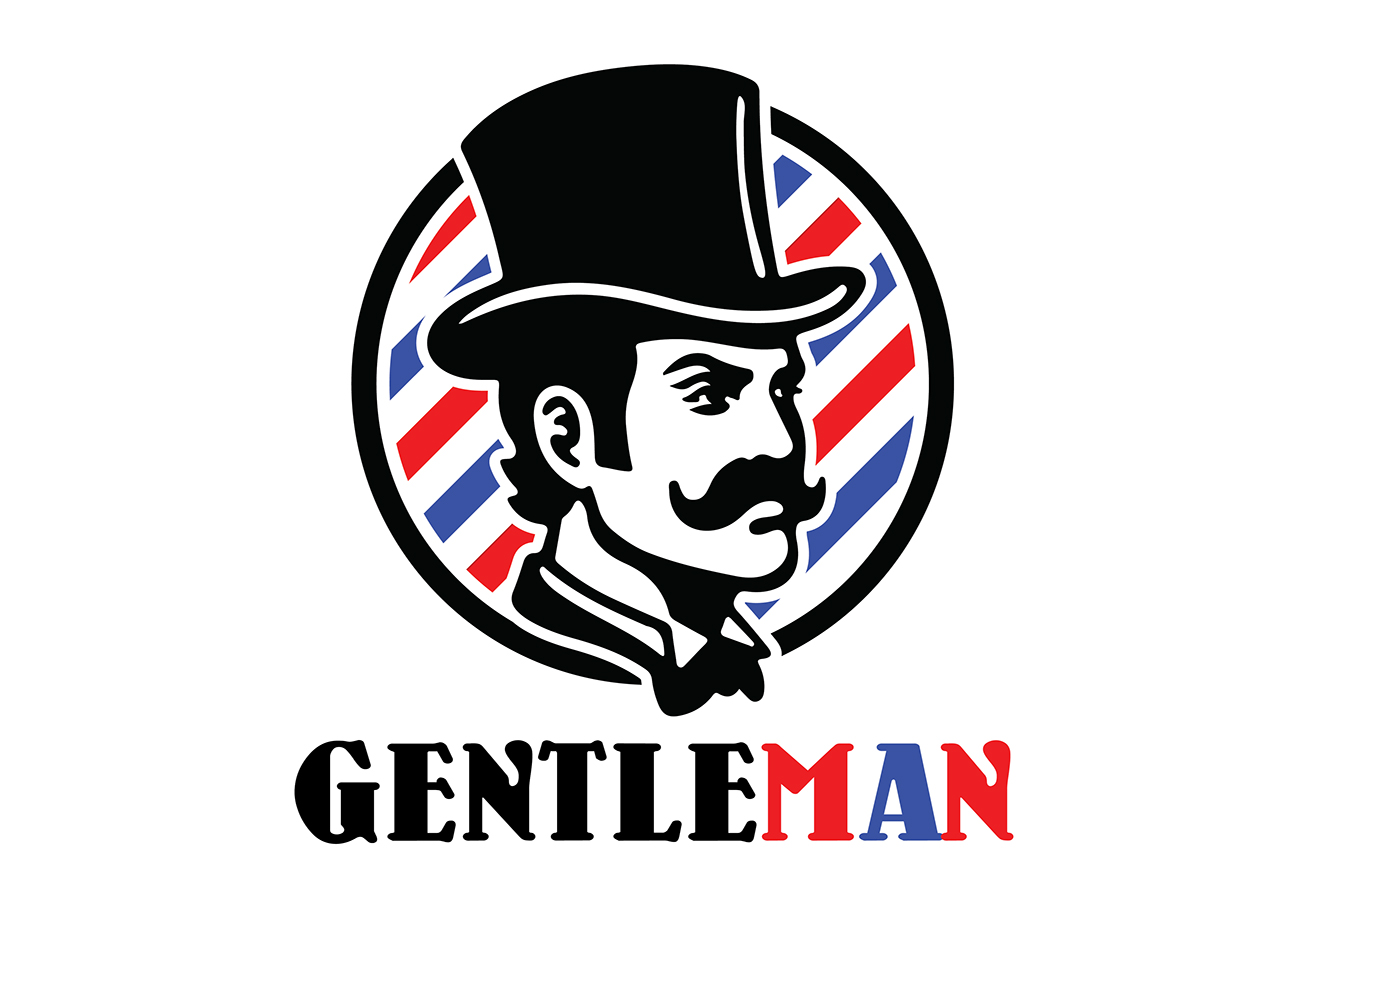 Gentlemens. Логотип джентльмен. Джентльмен надпись. Эмблема клуба джентльменов. Эмблема английского клуба джентльменов.